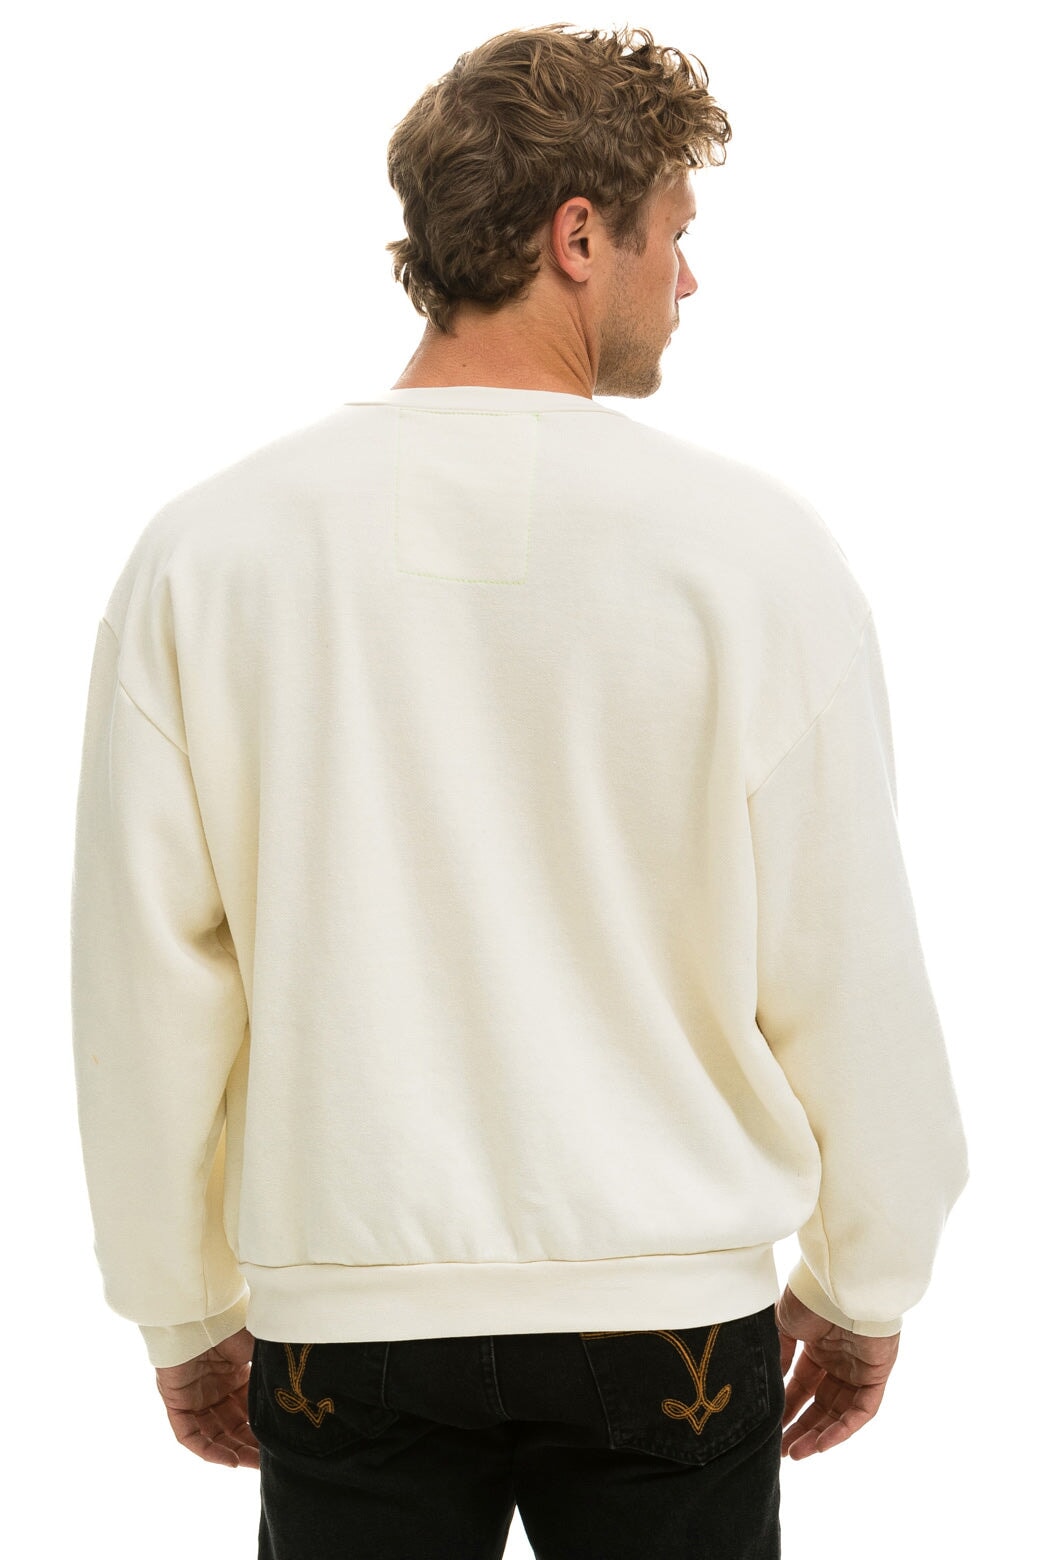 LOGO RELAXED CREW SWEATSHIRT - VINTAGE WHITE Sweatshirt Aviator Nation 